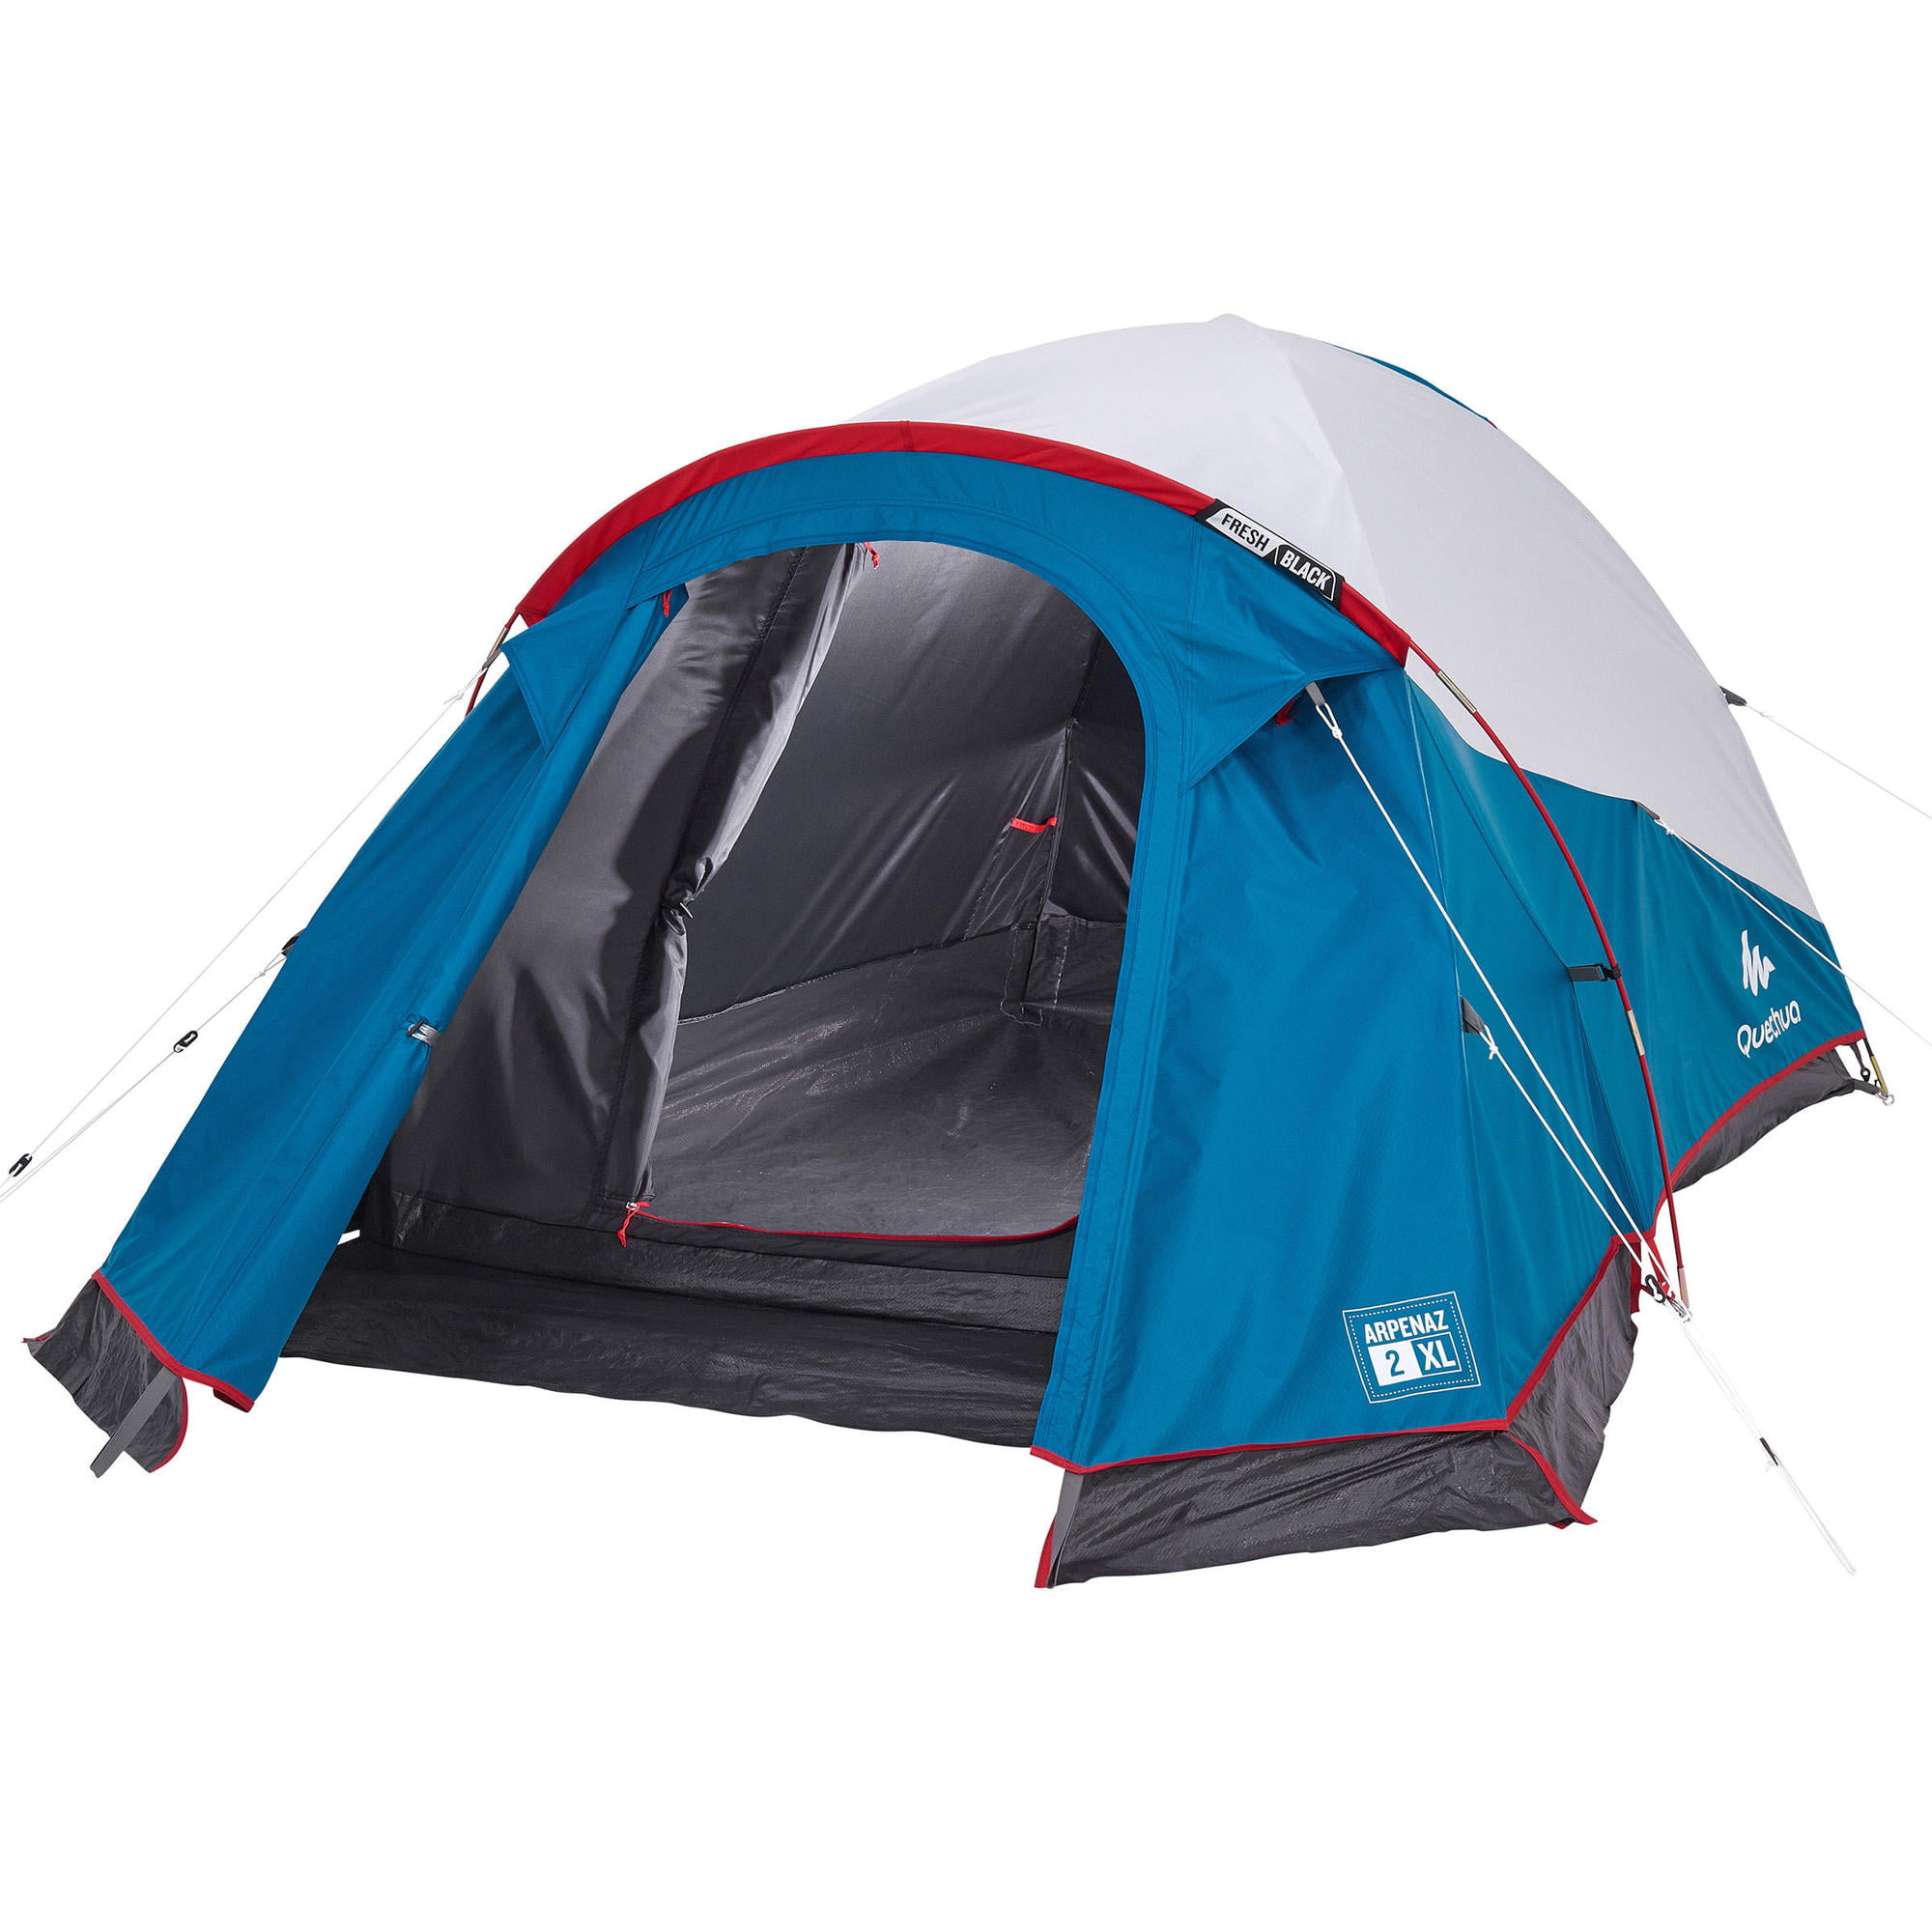 Decathlon 2-Person Dome Tent - Walmart.com